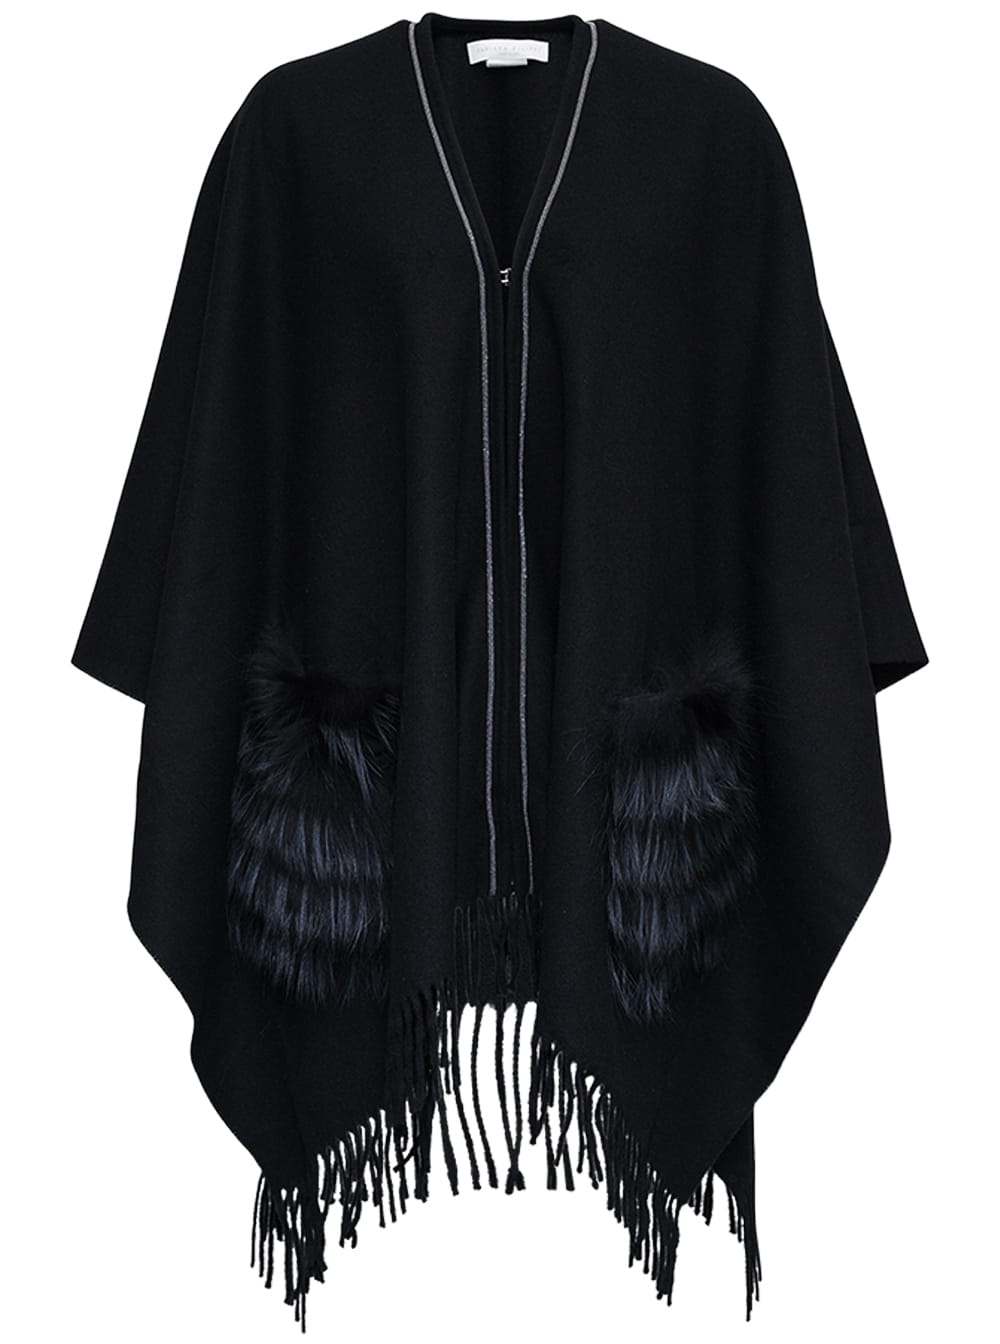 Fabiana Filippi Black Wool Cape With Fringes And Fur Pockets